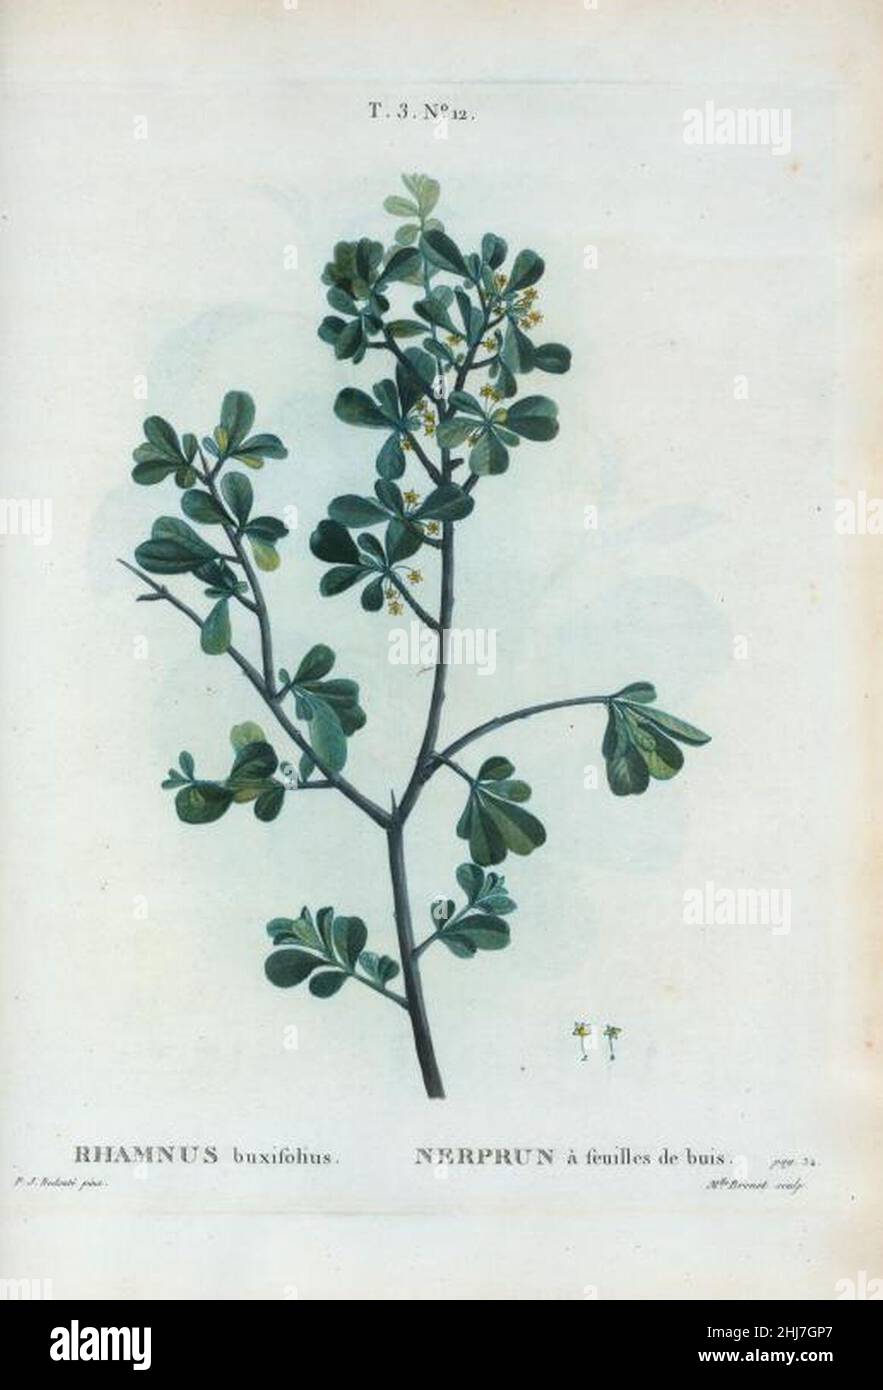 T3 12 Rhamnus buxifolia par Pierre-Joseph Redouté. Stock Photo